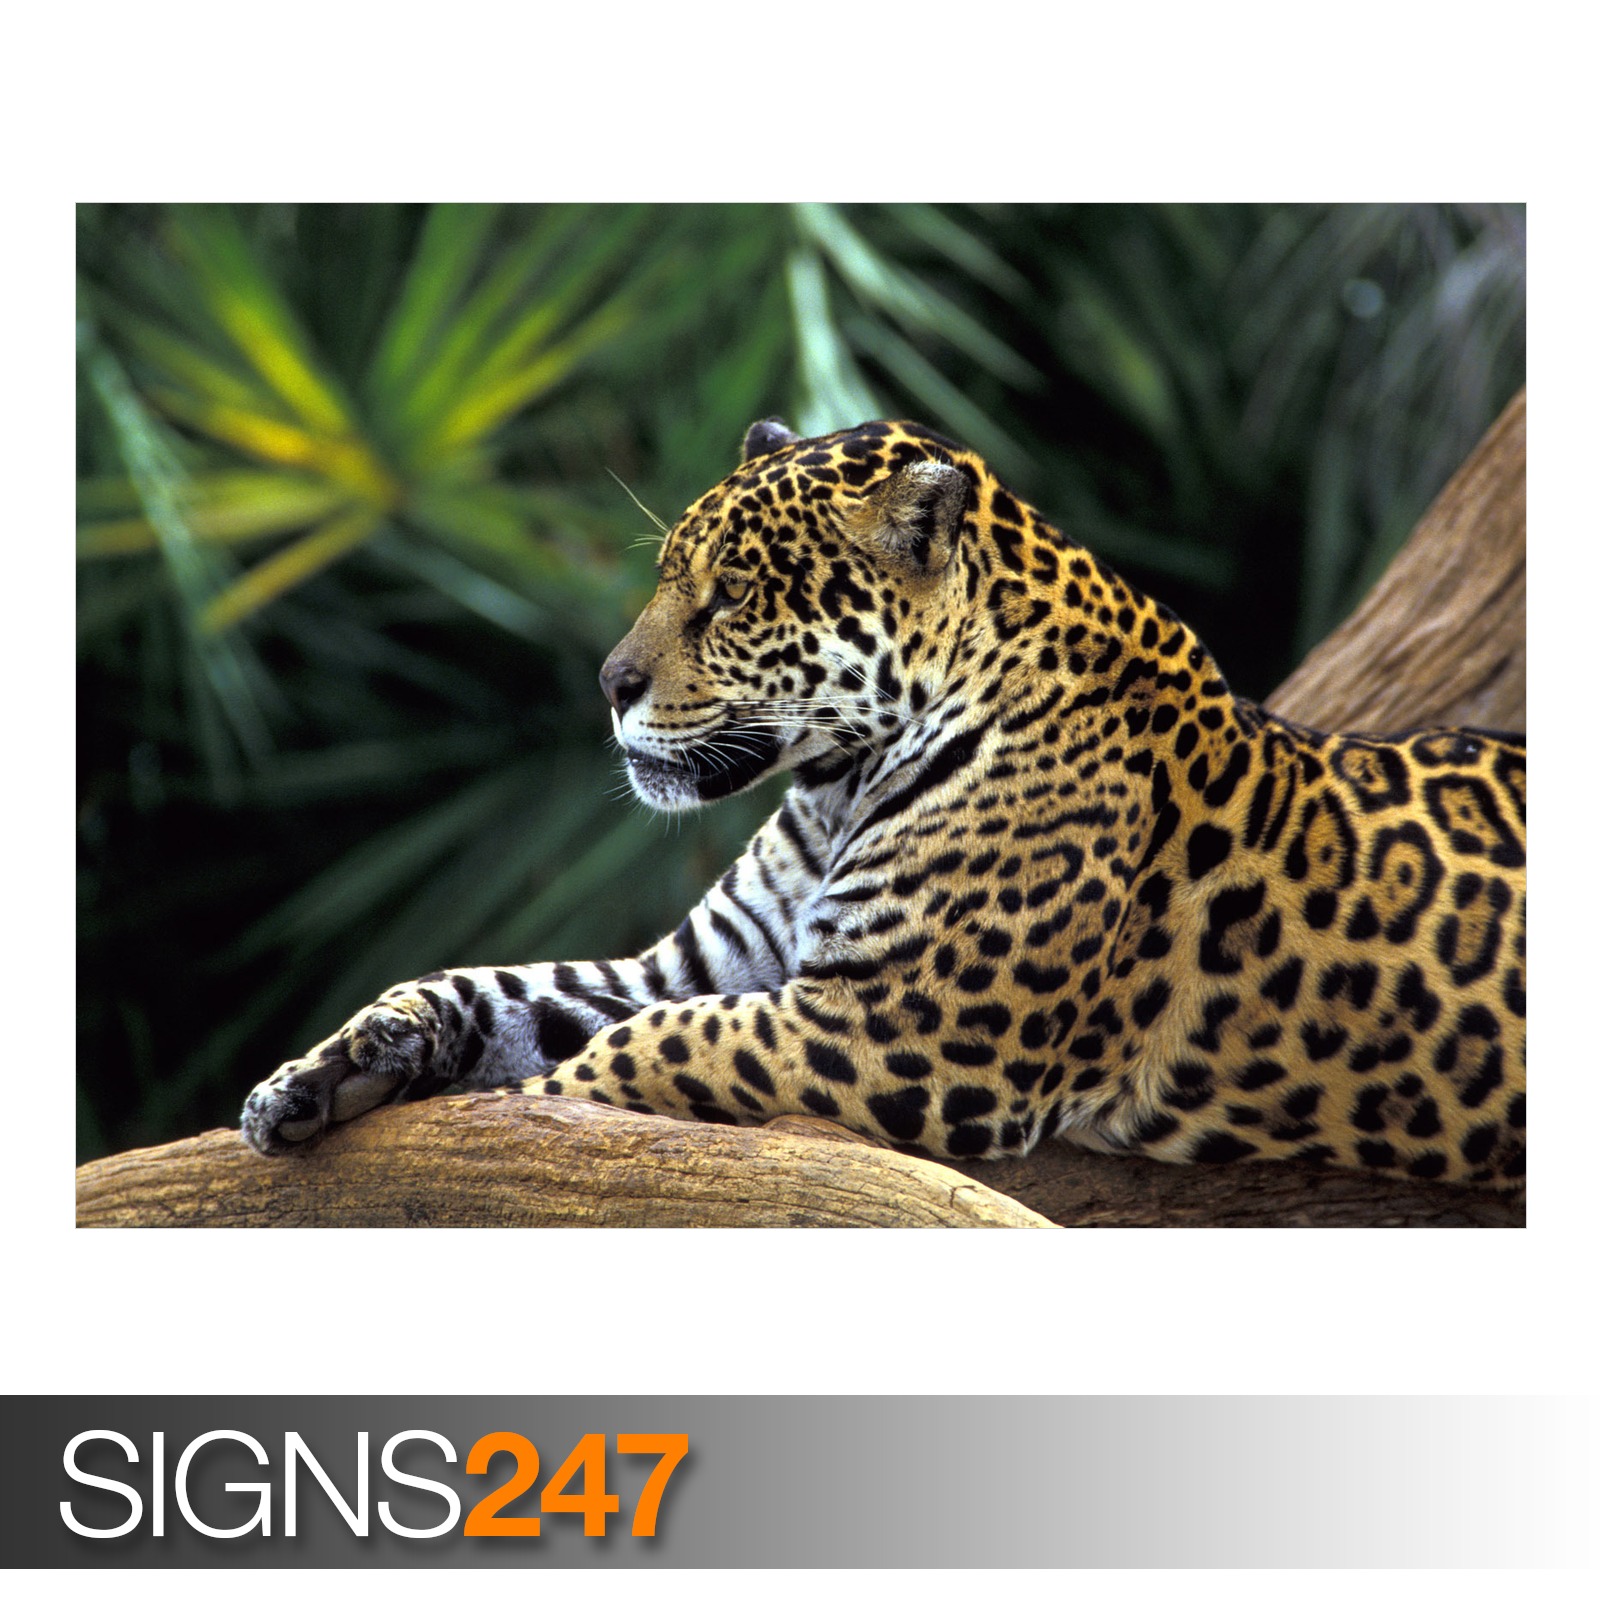 JAGUAR IN AMAZON  RAINFOREST 3438 Animal  Poster  Poster  